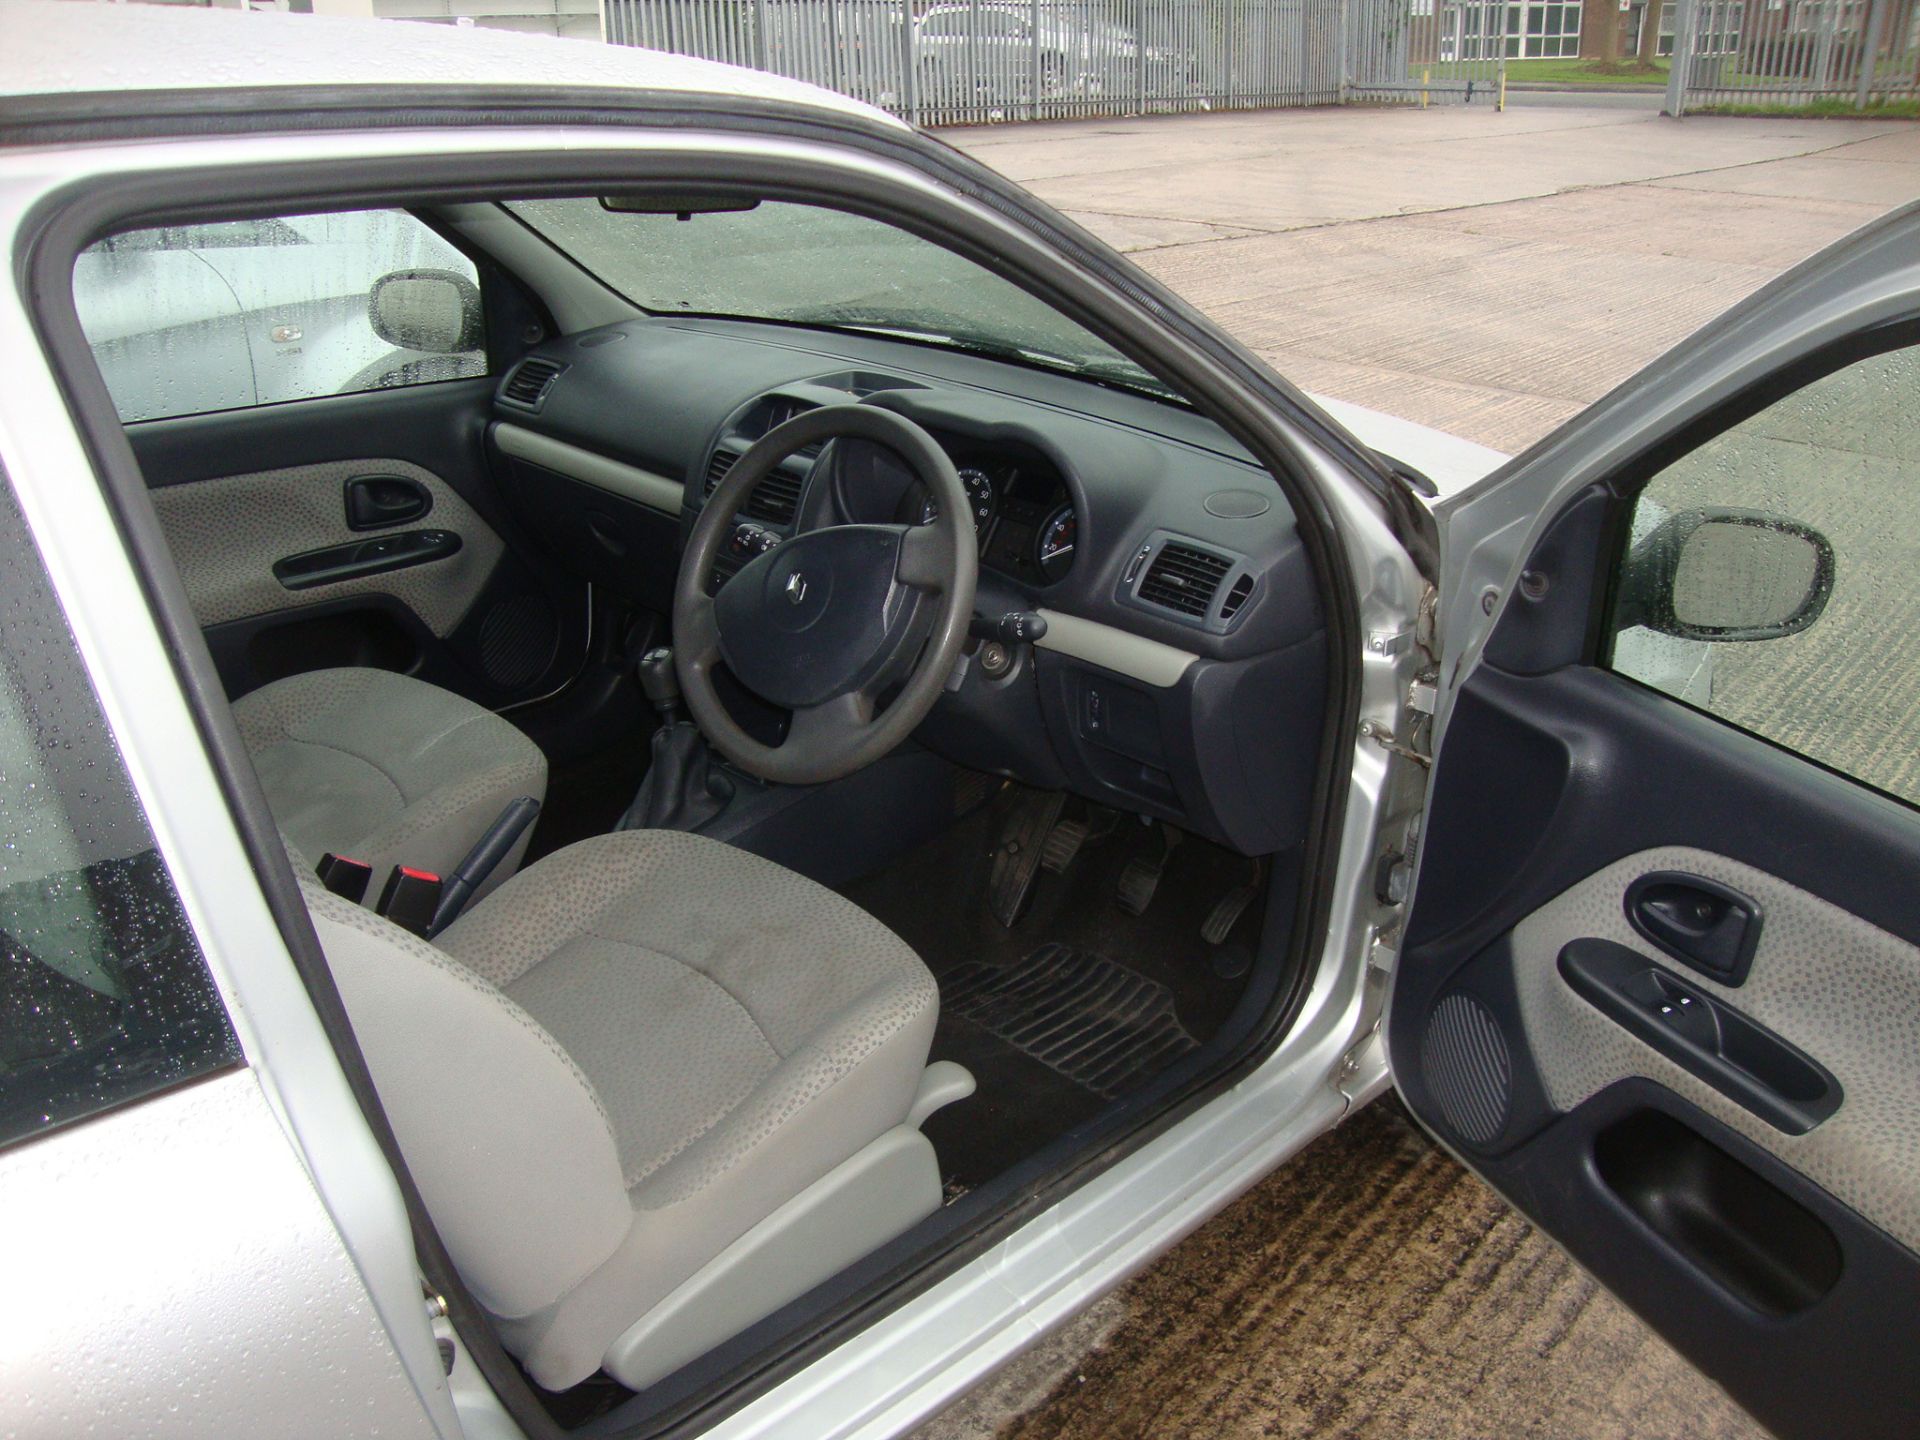 DG06 VYR Renault Clio Campus 3-door hatchback - Image 5 of 11